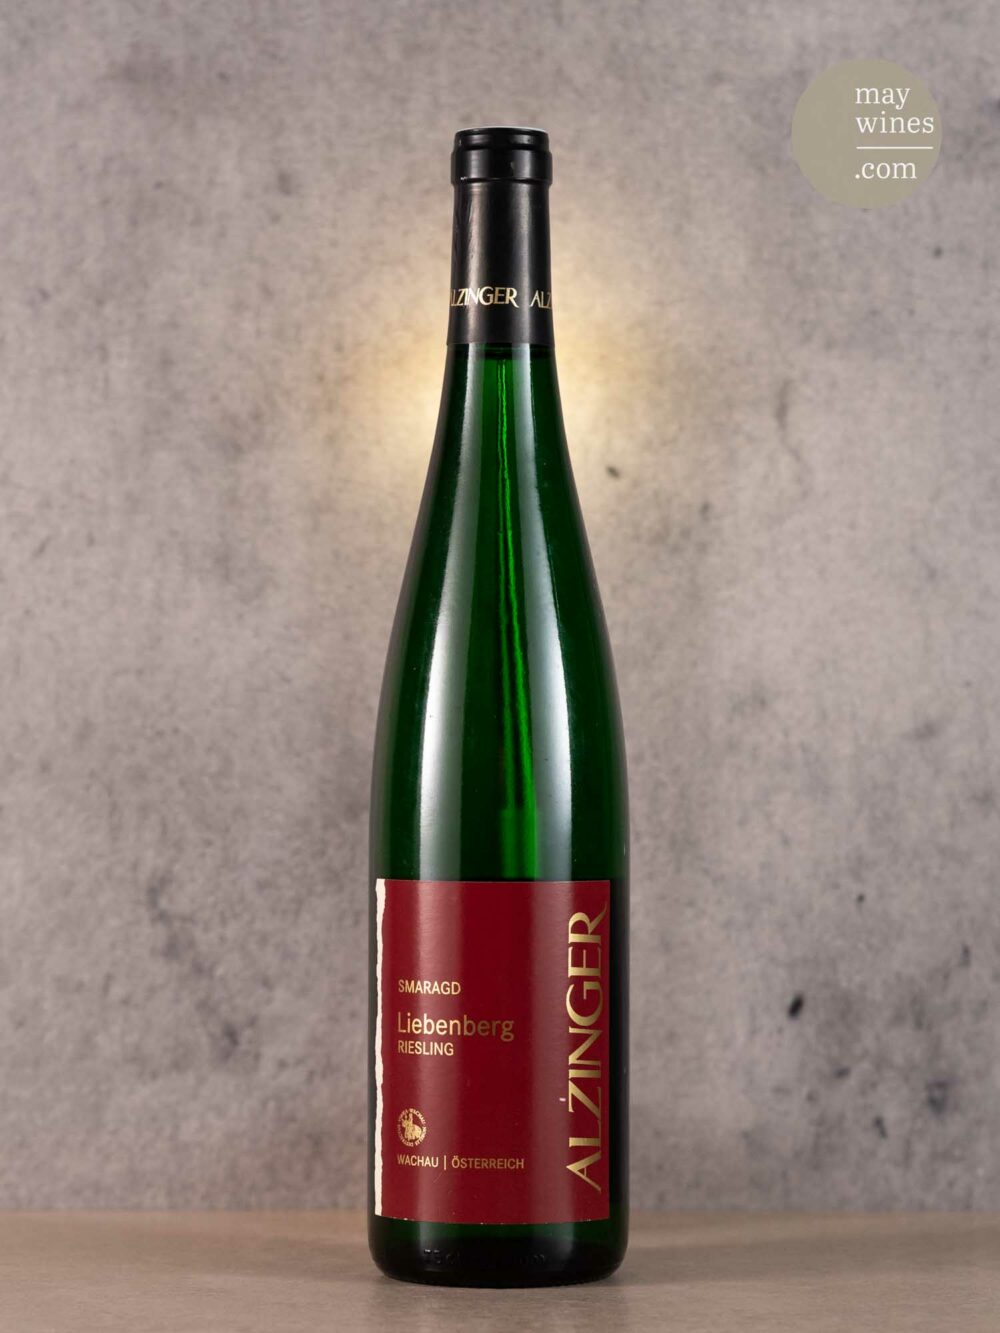 May Wines – Weißwein – 2012 Liebenberg Riesling Smaragd - Weingut Alzinger